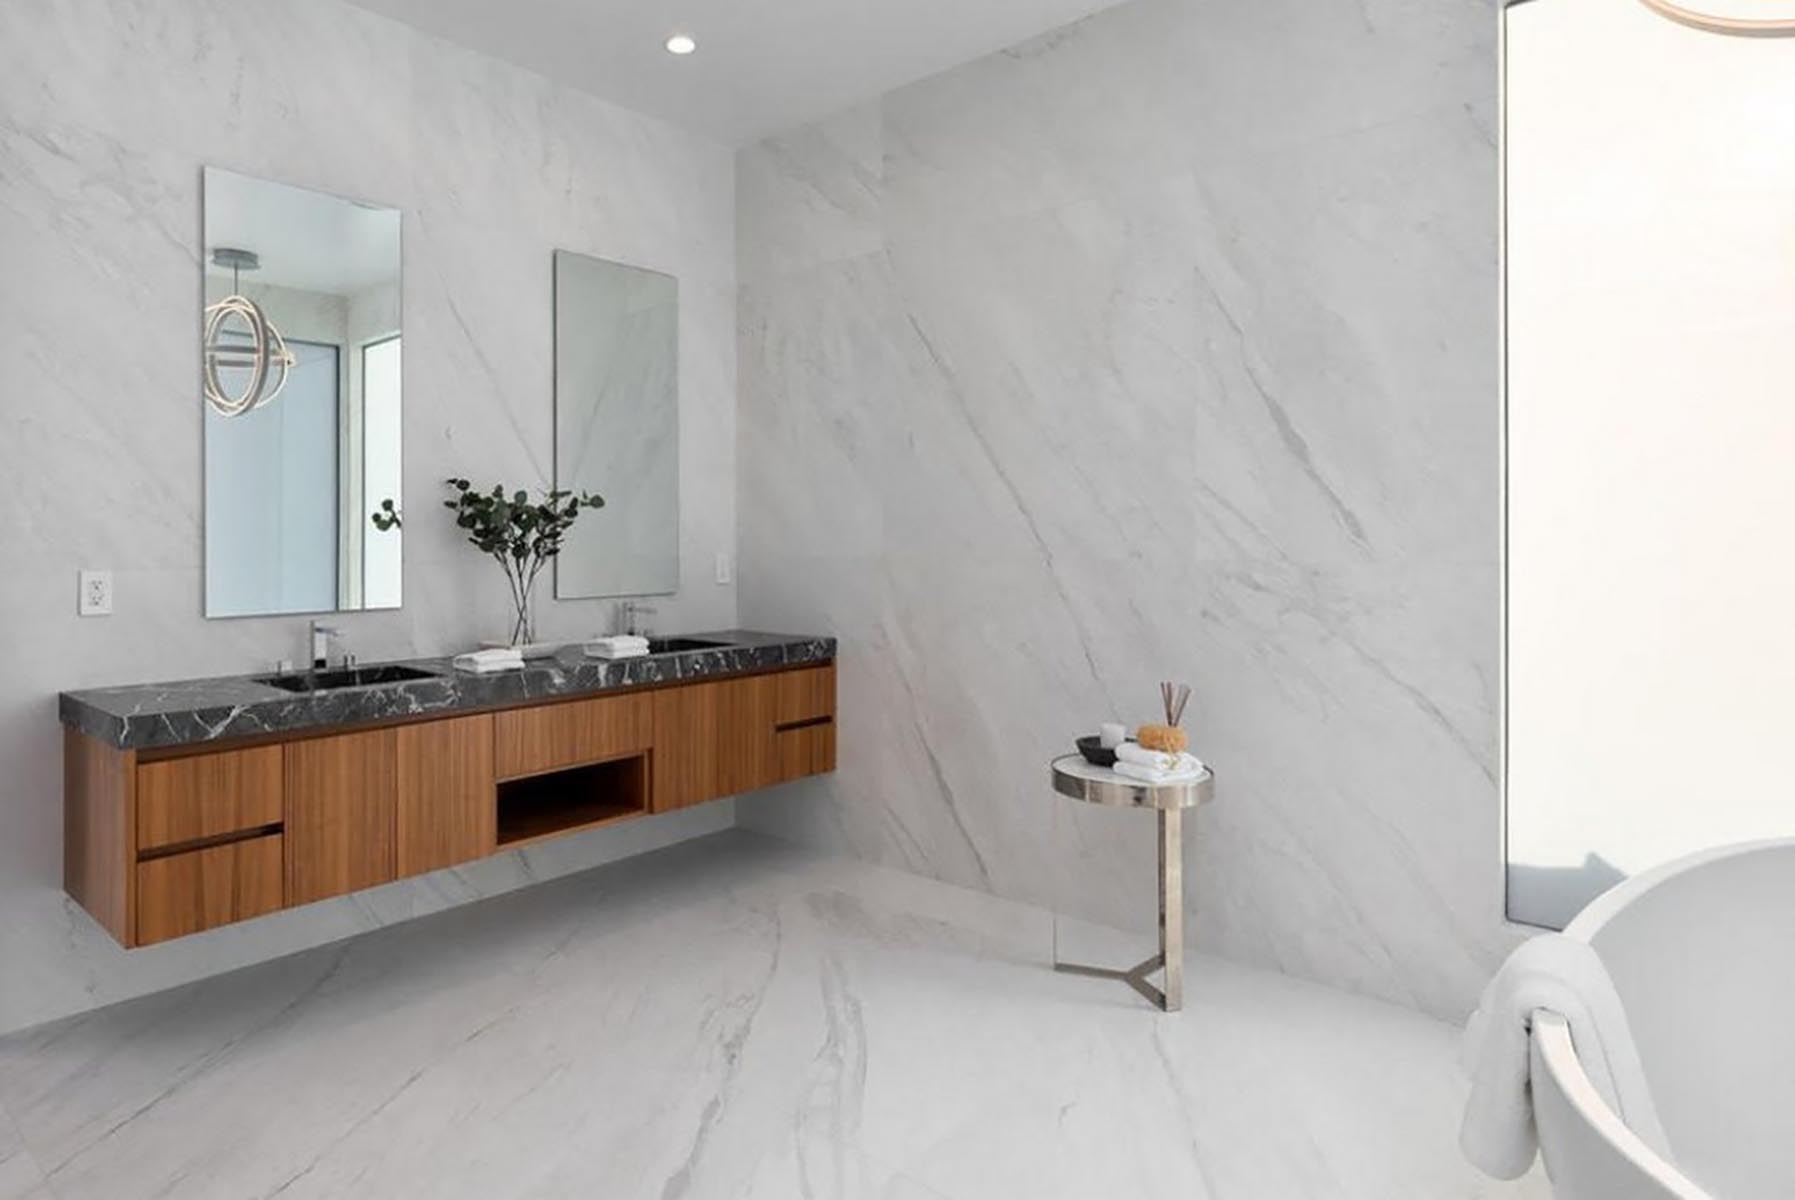 Home remodel plans Los Angeles modern contemporary master bathroom 2